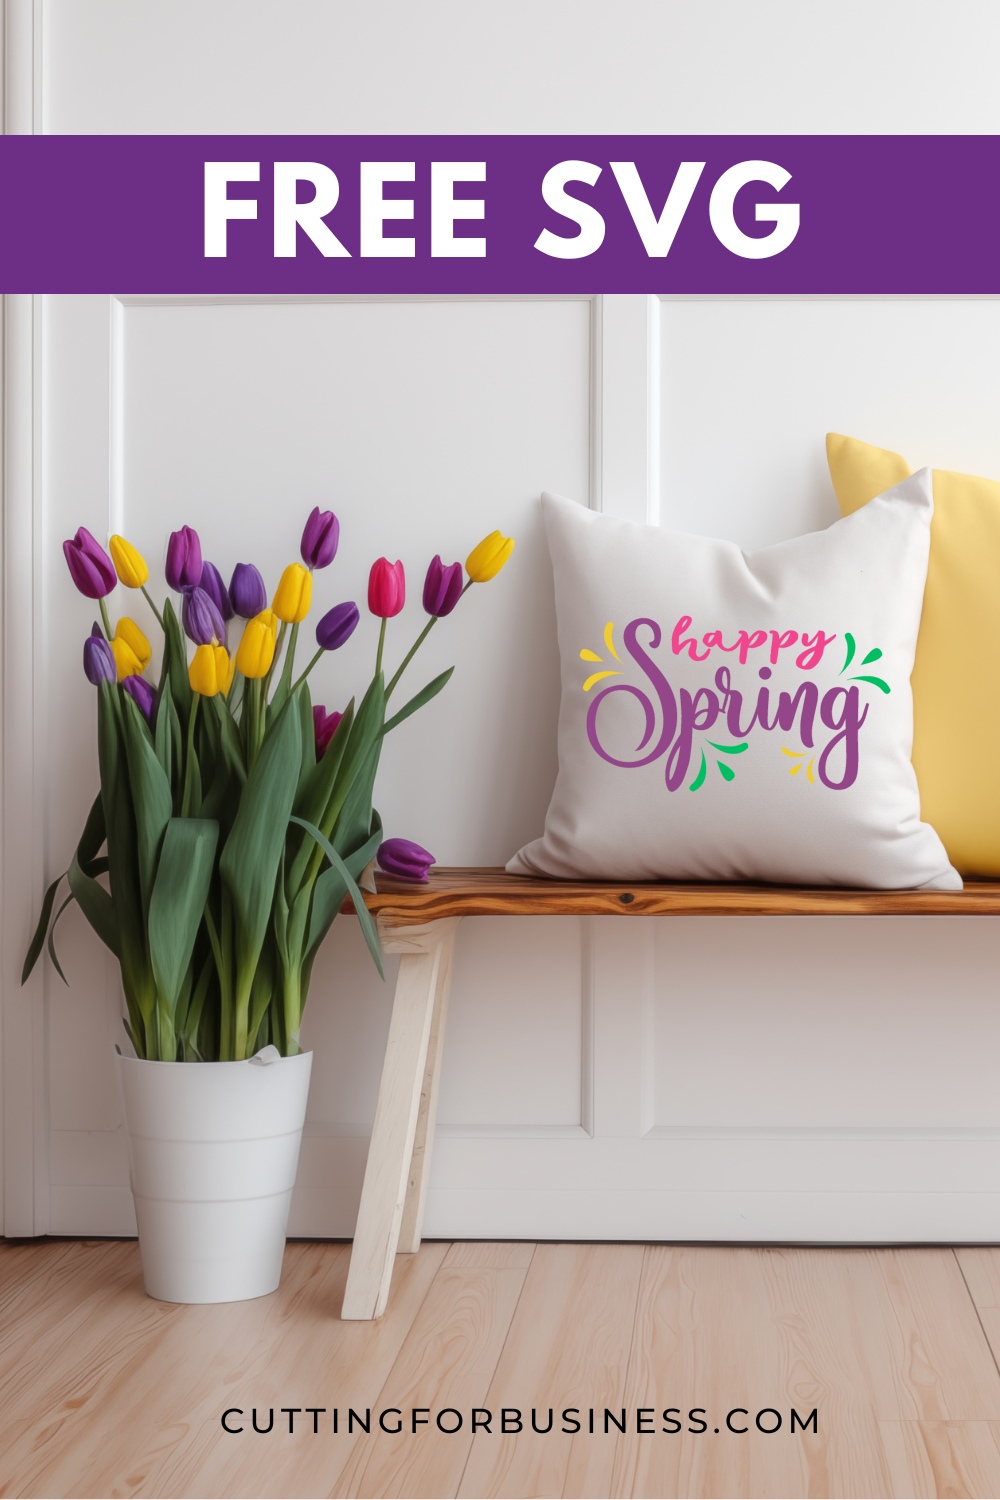 Happy Spring SVG - cuttingforbusiness.com